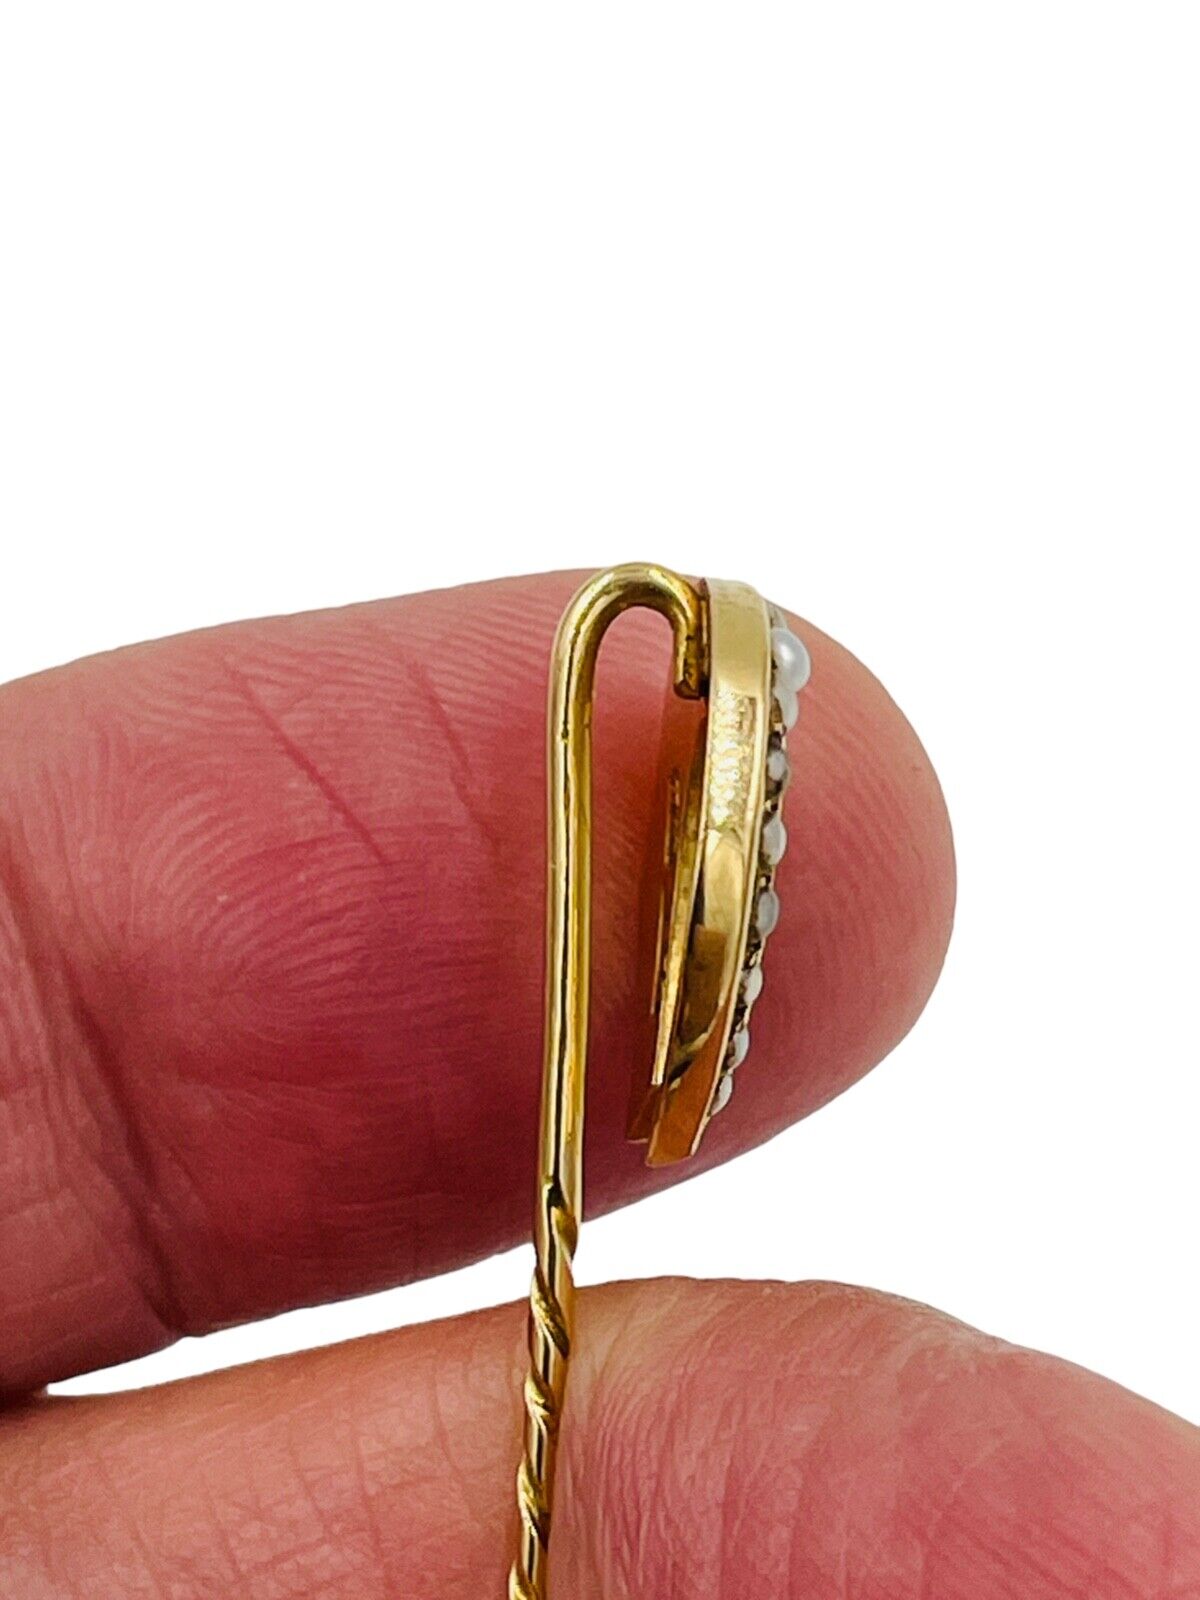 Vintage  Swedish 18k Yellow Gold Horse Shoe Pearl Stick Pin